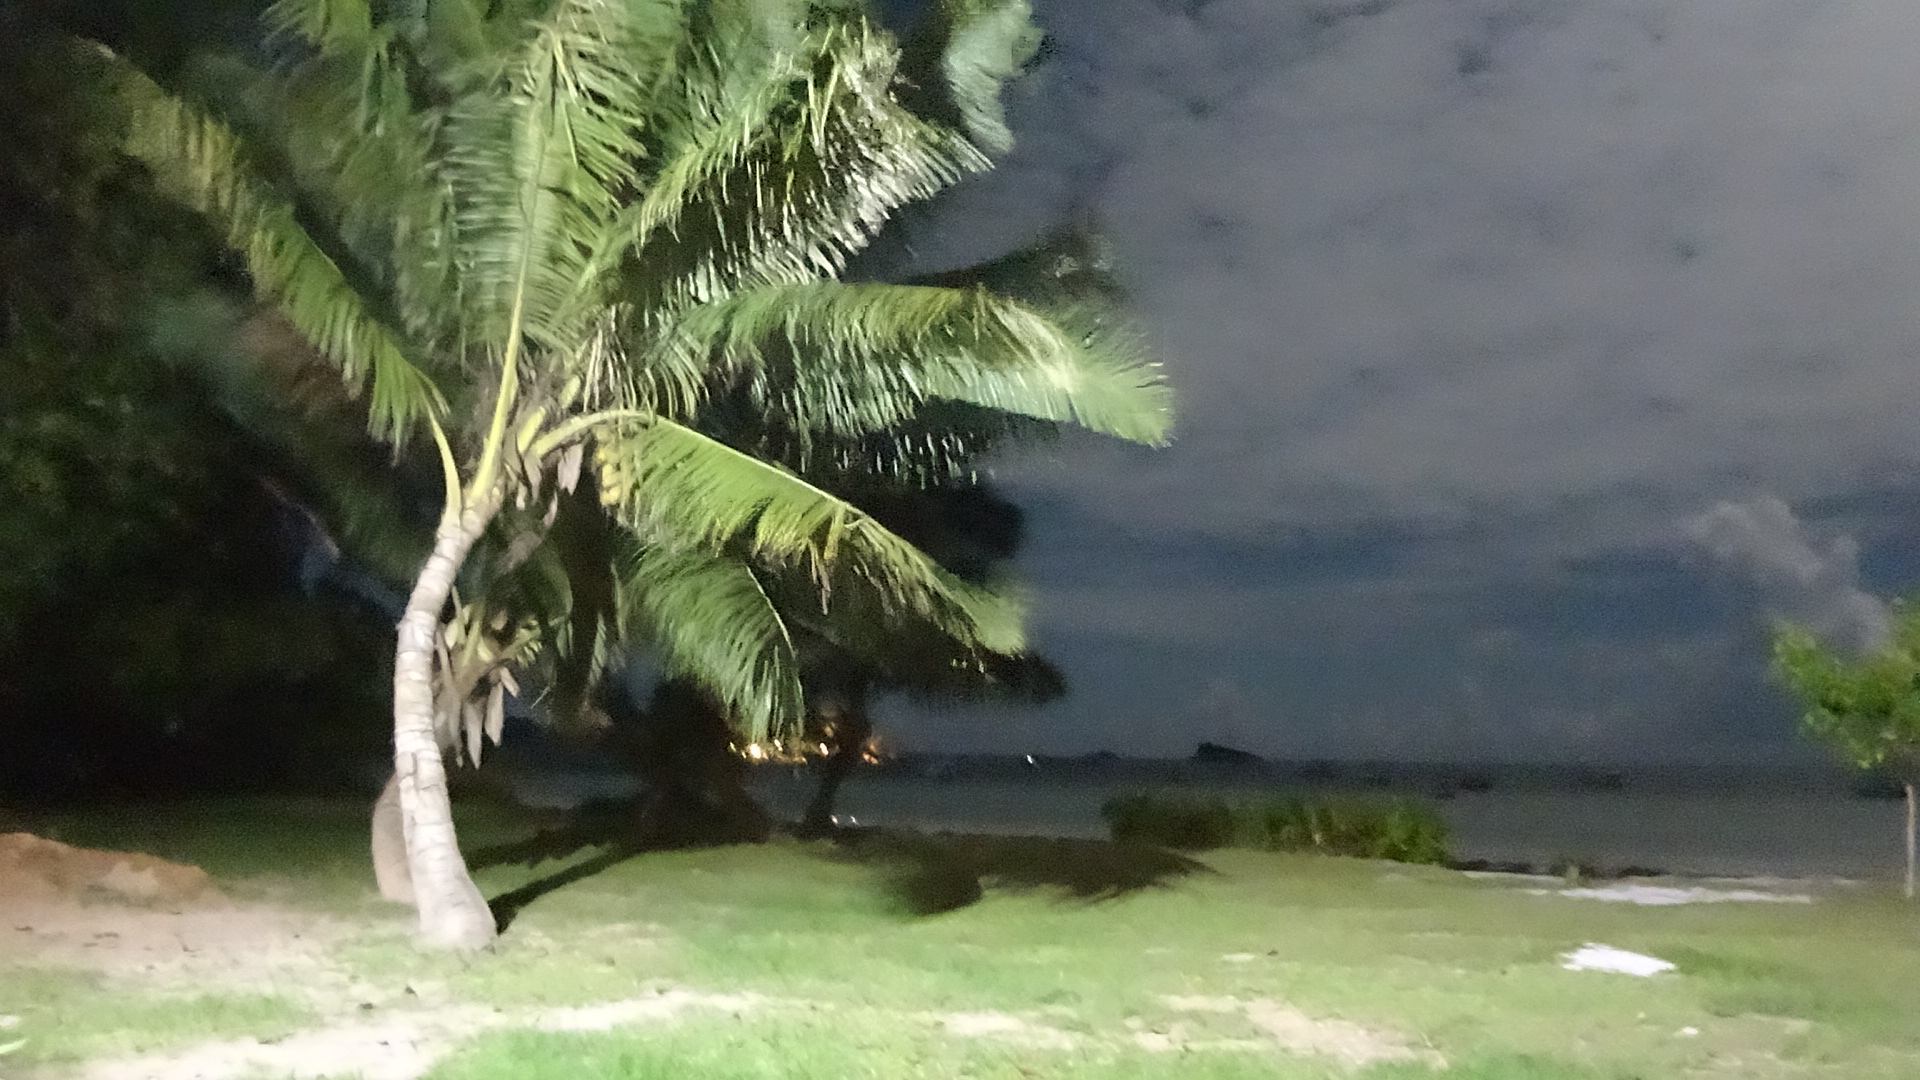 Palme bei Nacht